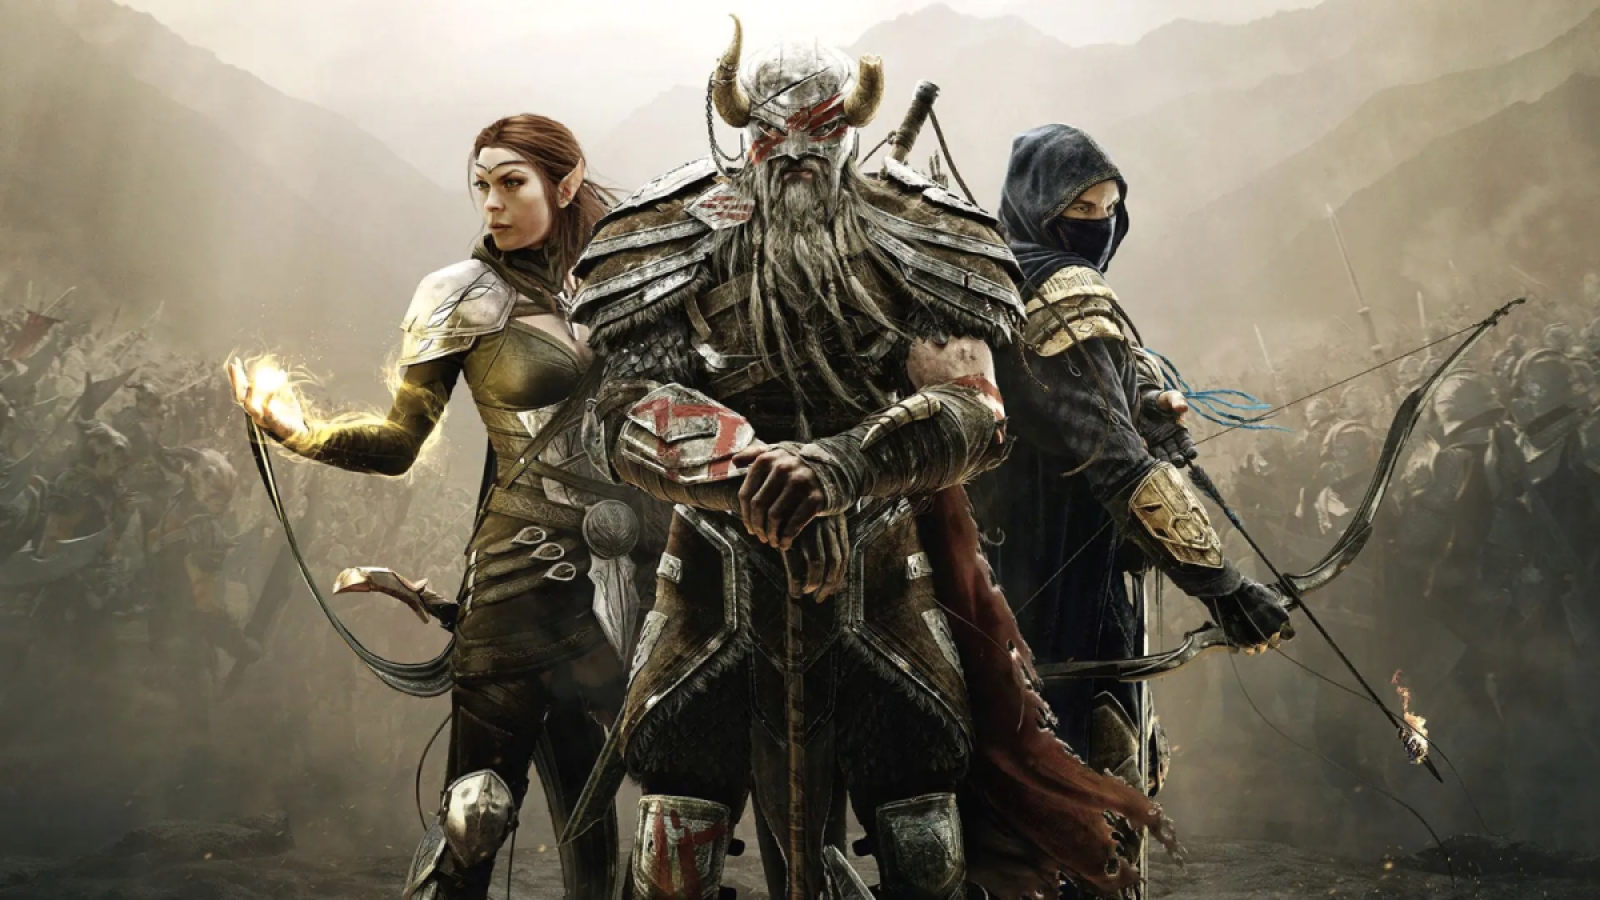 The Elder Scrolls characters in promotional artwork